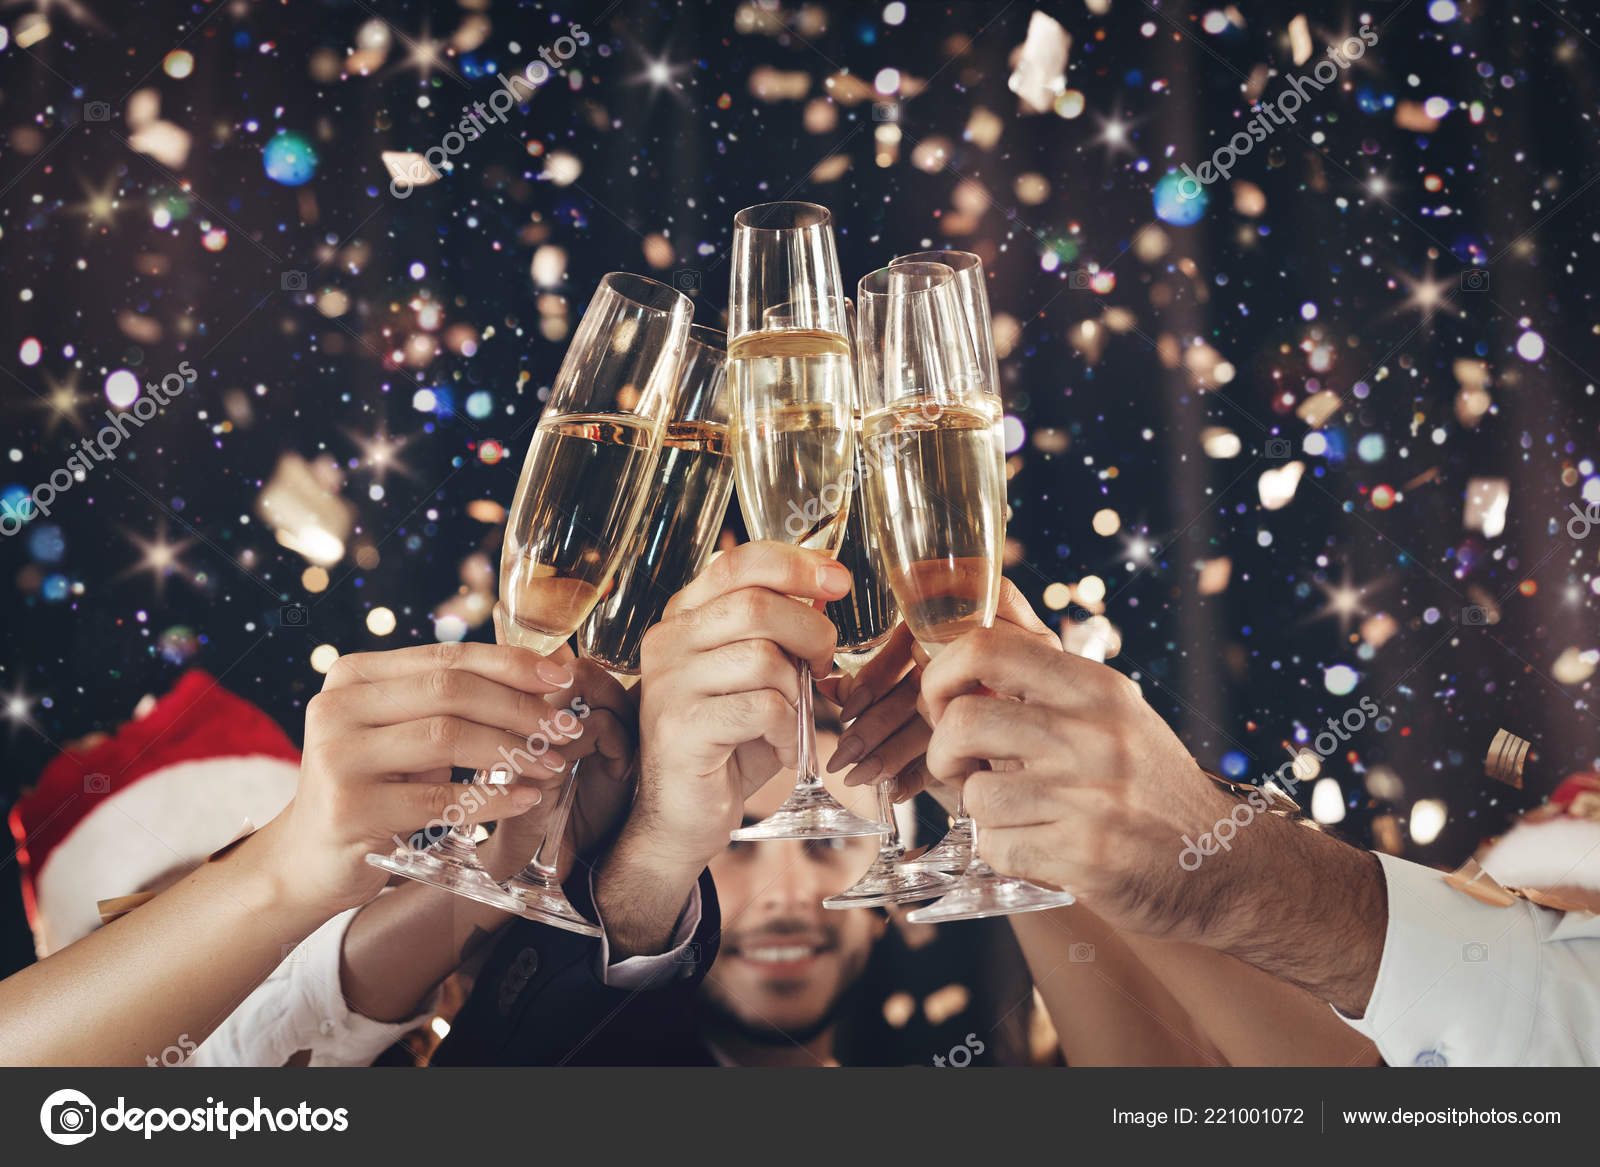 https://st4.depositphotos.com/4218696/22100/i/1600/depositphotos_221001072-stock-photo-clinking-glasses-of-champagne-in.jpg